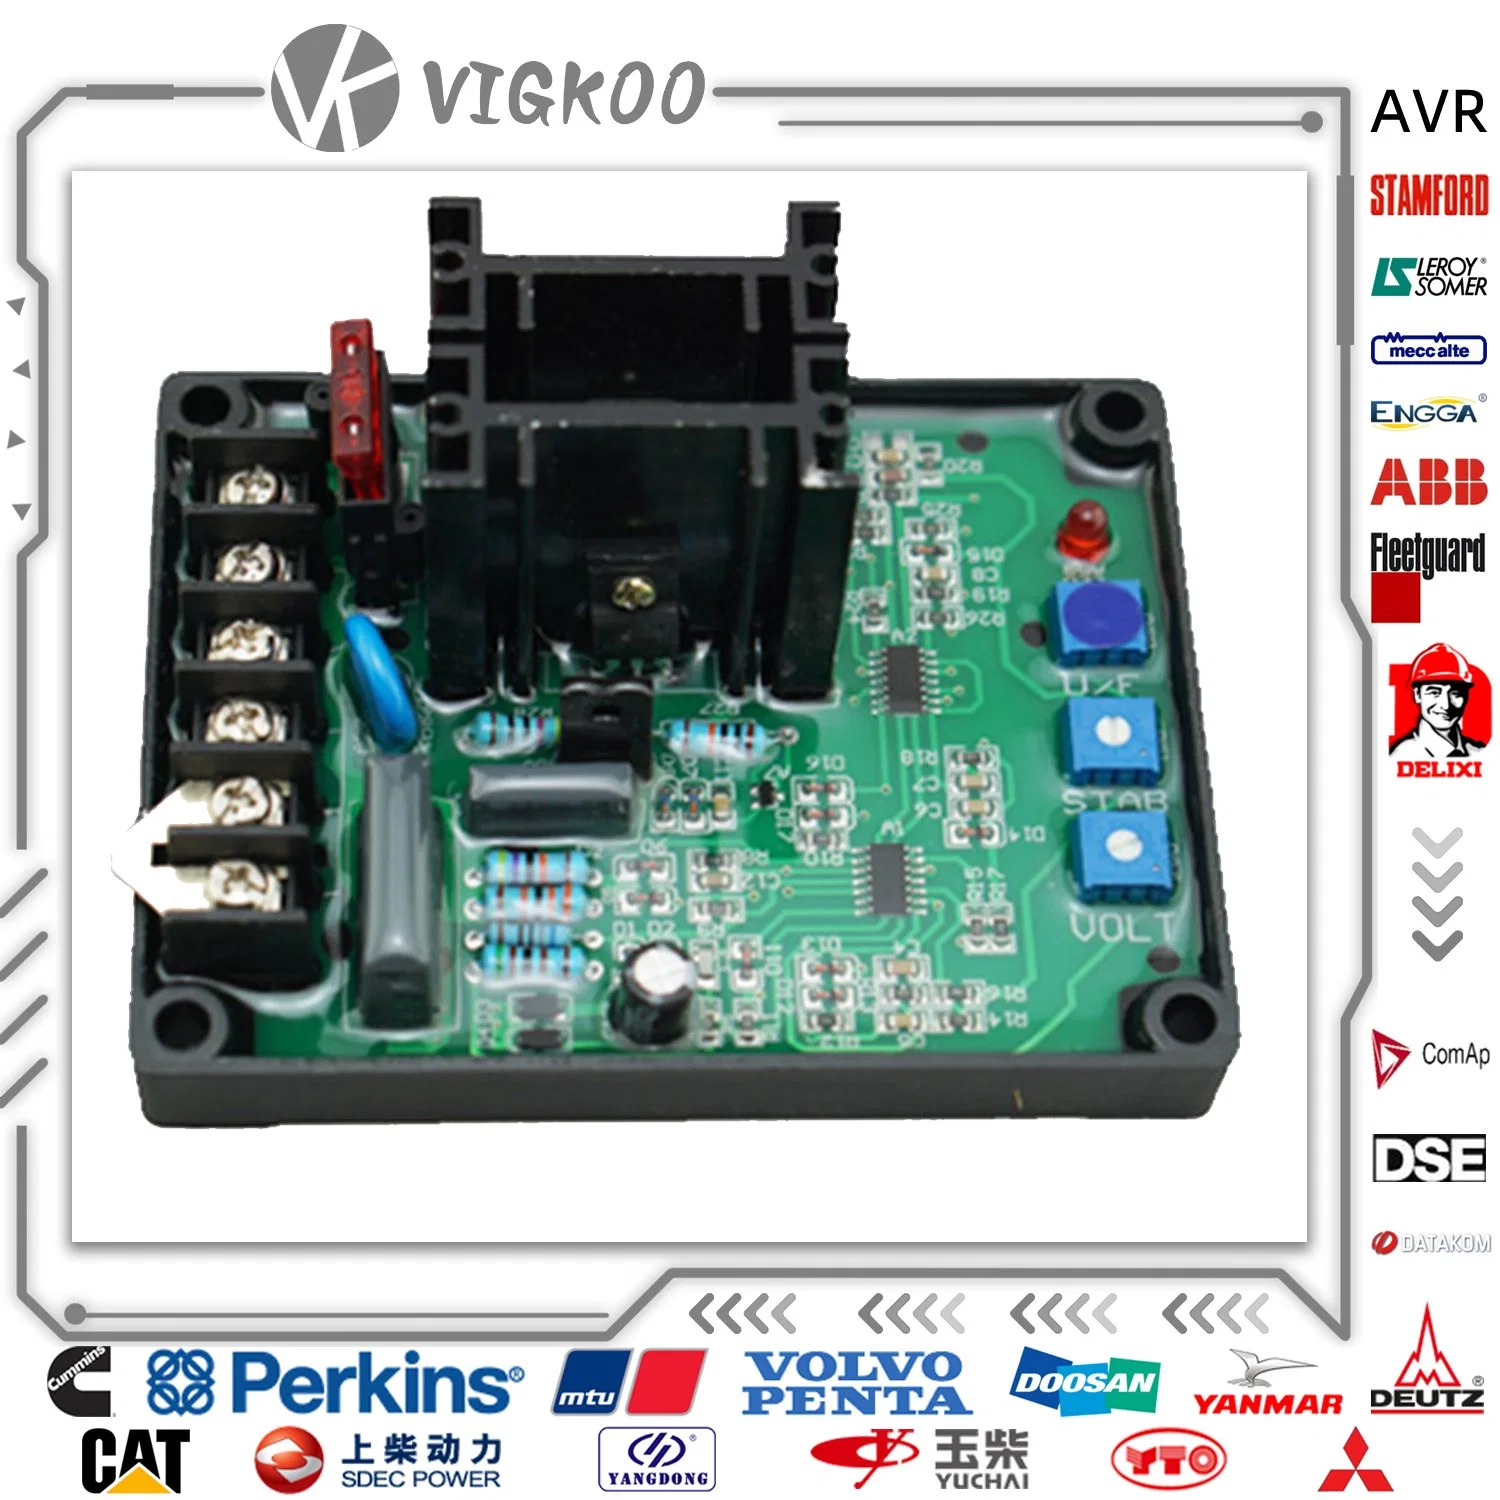 AVR Gavr 12A Automatic Voltage Regulator Frequency: 50 60 Hz.